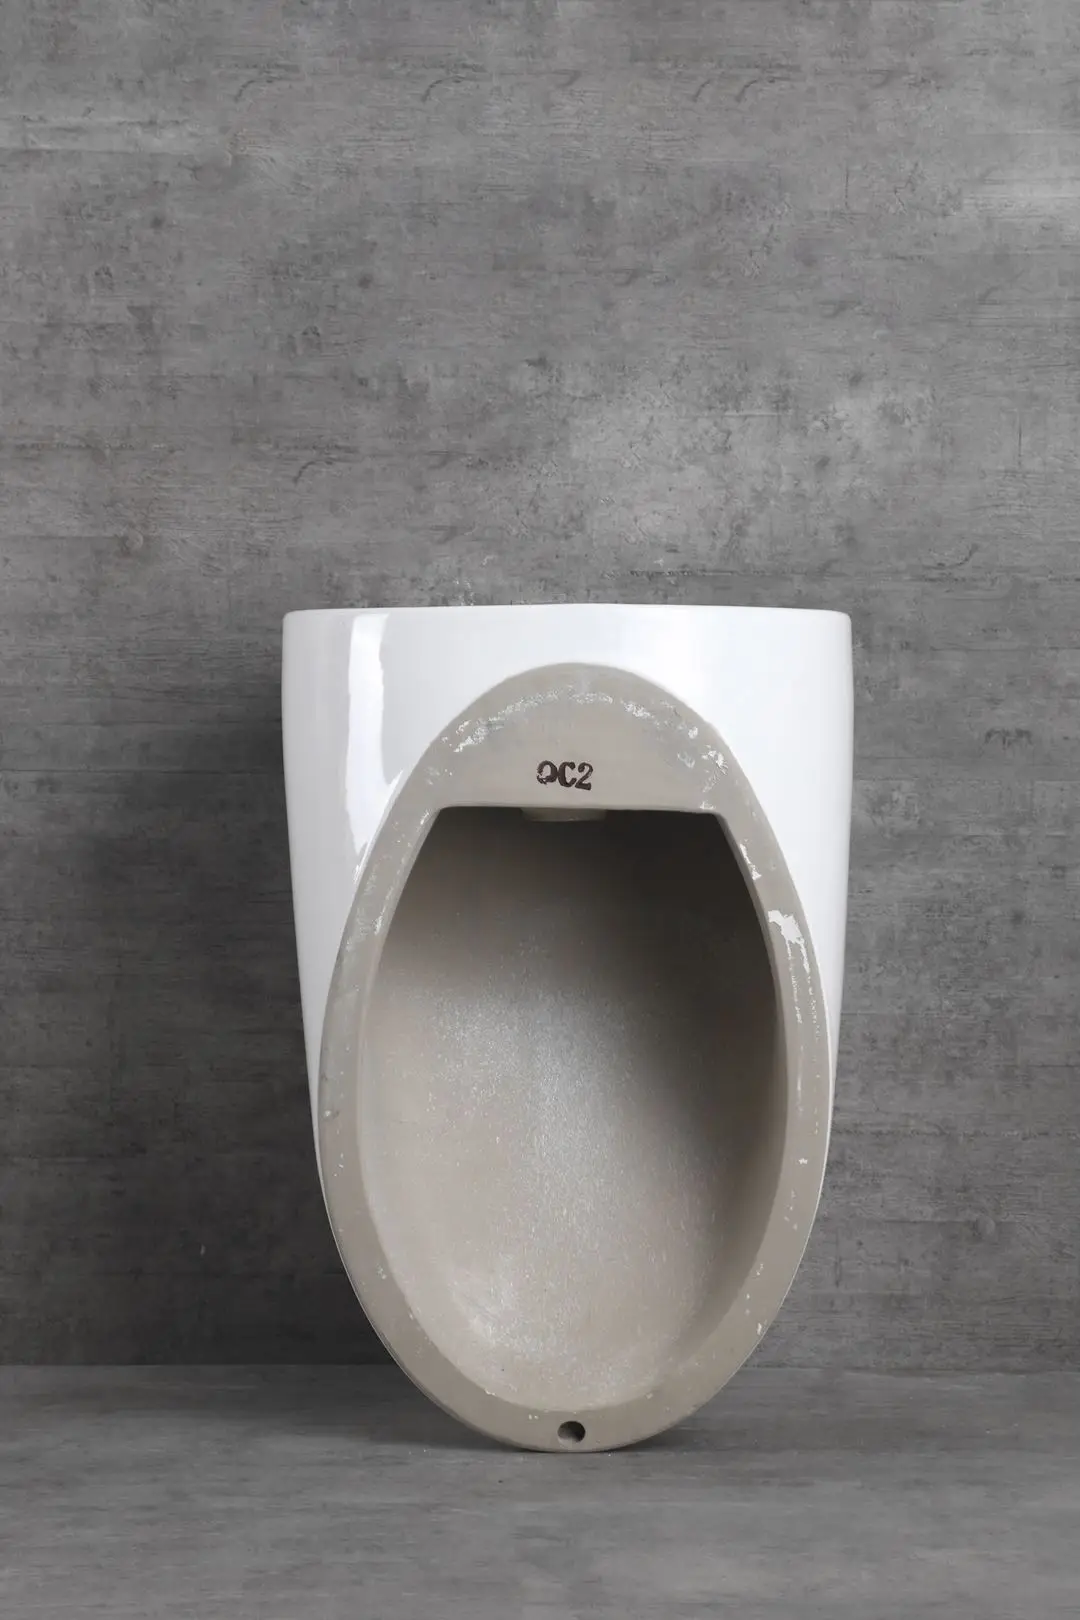 PATE B180 ceramic wall mounted round pedestal basin sanitary ware mini bathroom home washroom sink